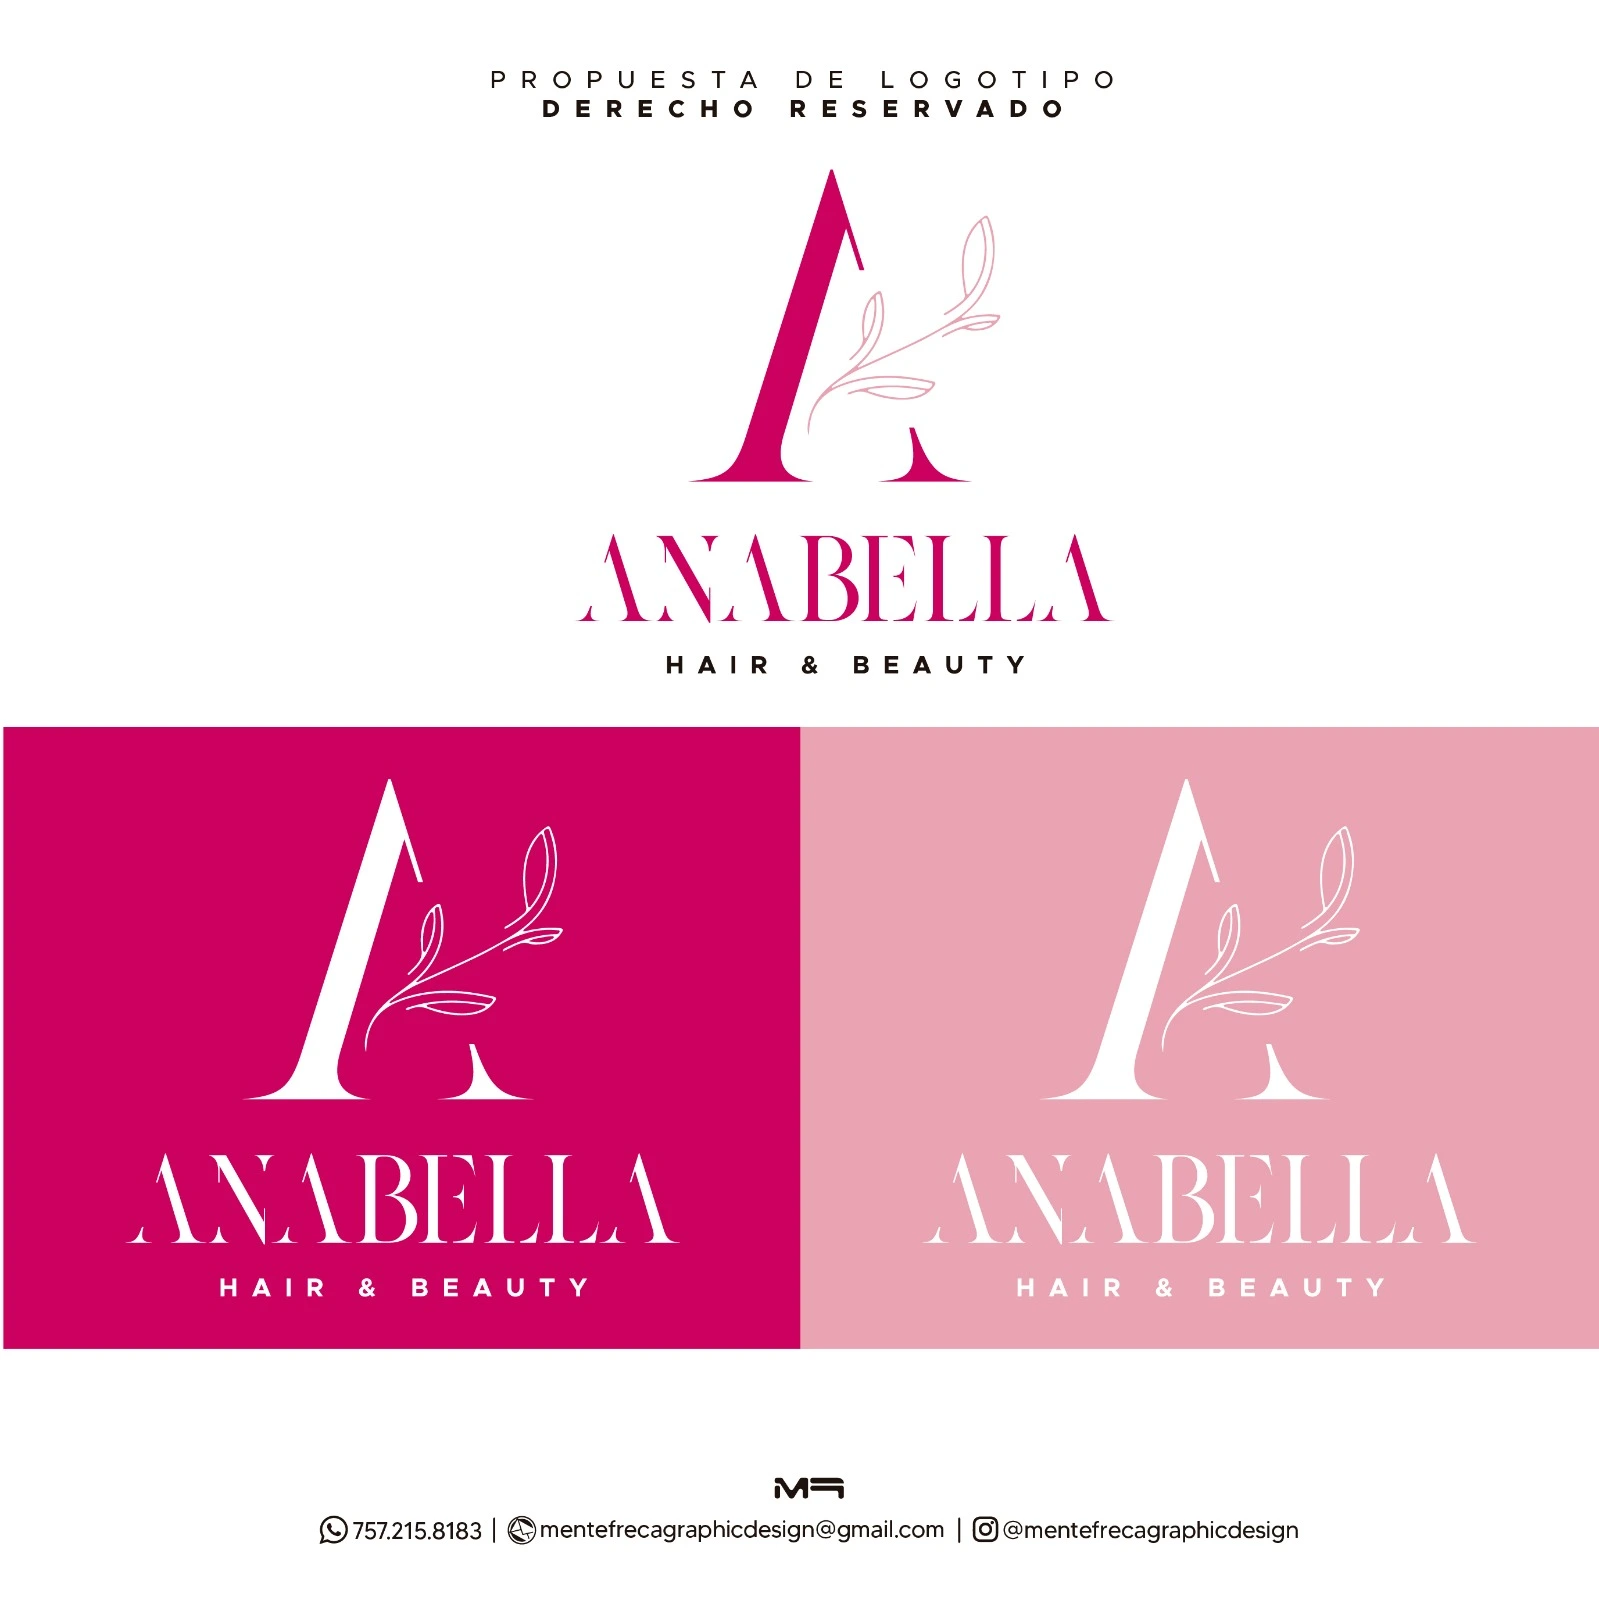 Anabella Hair & Beauty Picmentation